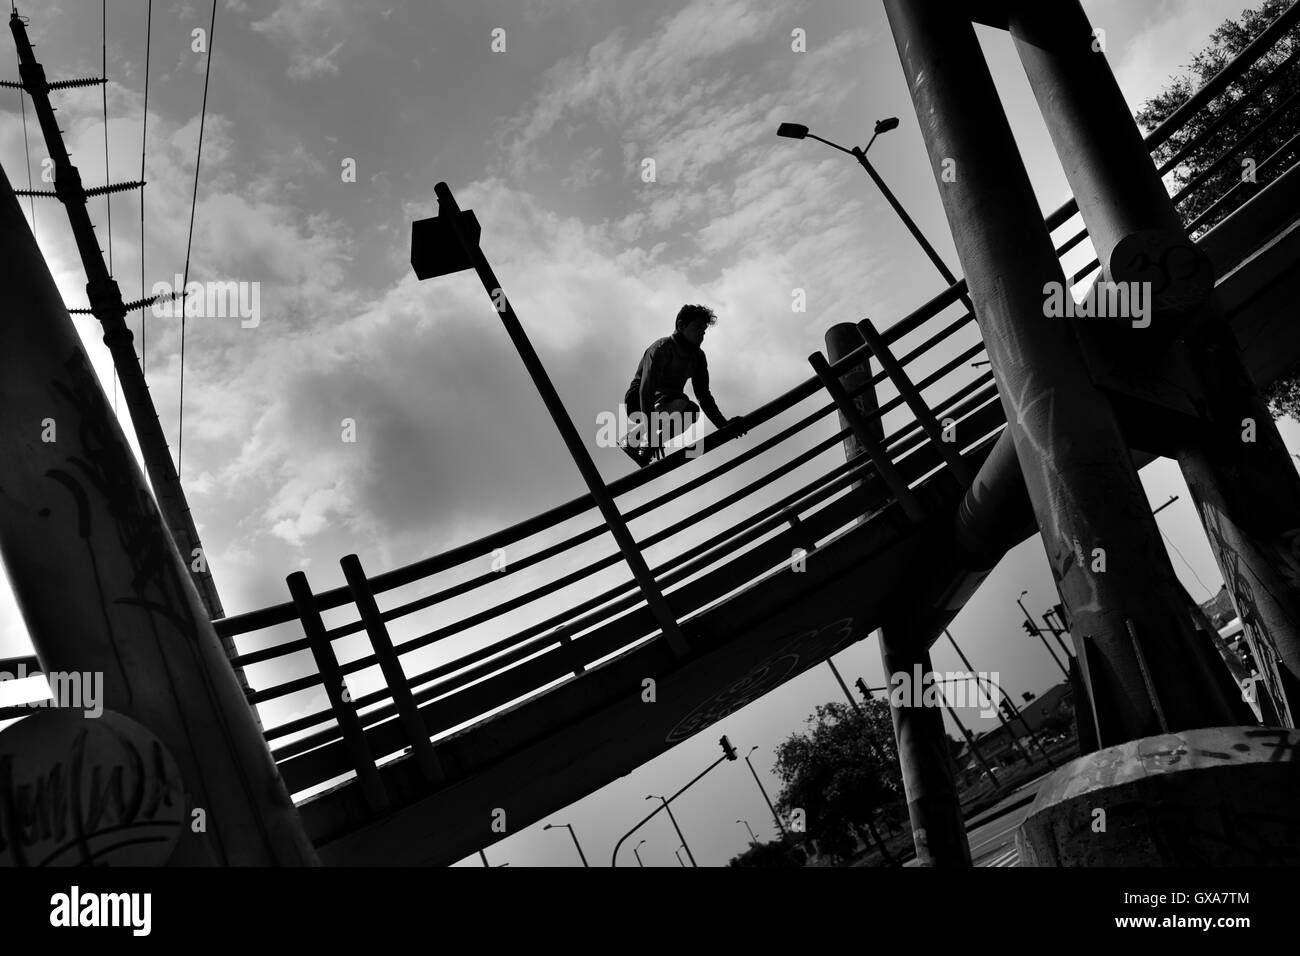 Steven Mantilla, a freerunner from Tamashikaze team, jumps over the footbridge railing in Bogotá, Colombia. Stock Photo